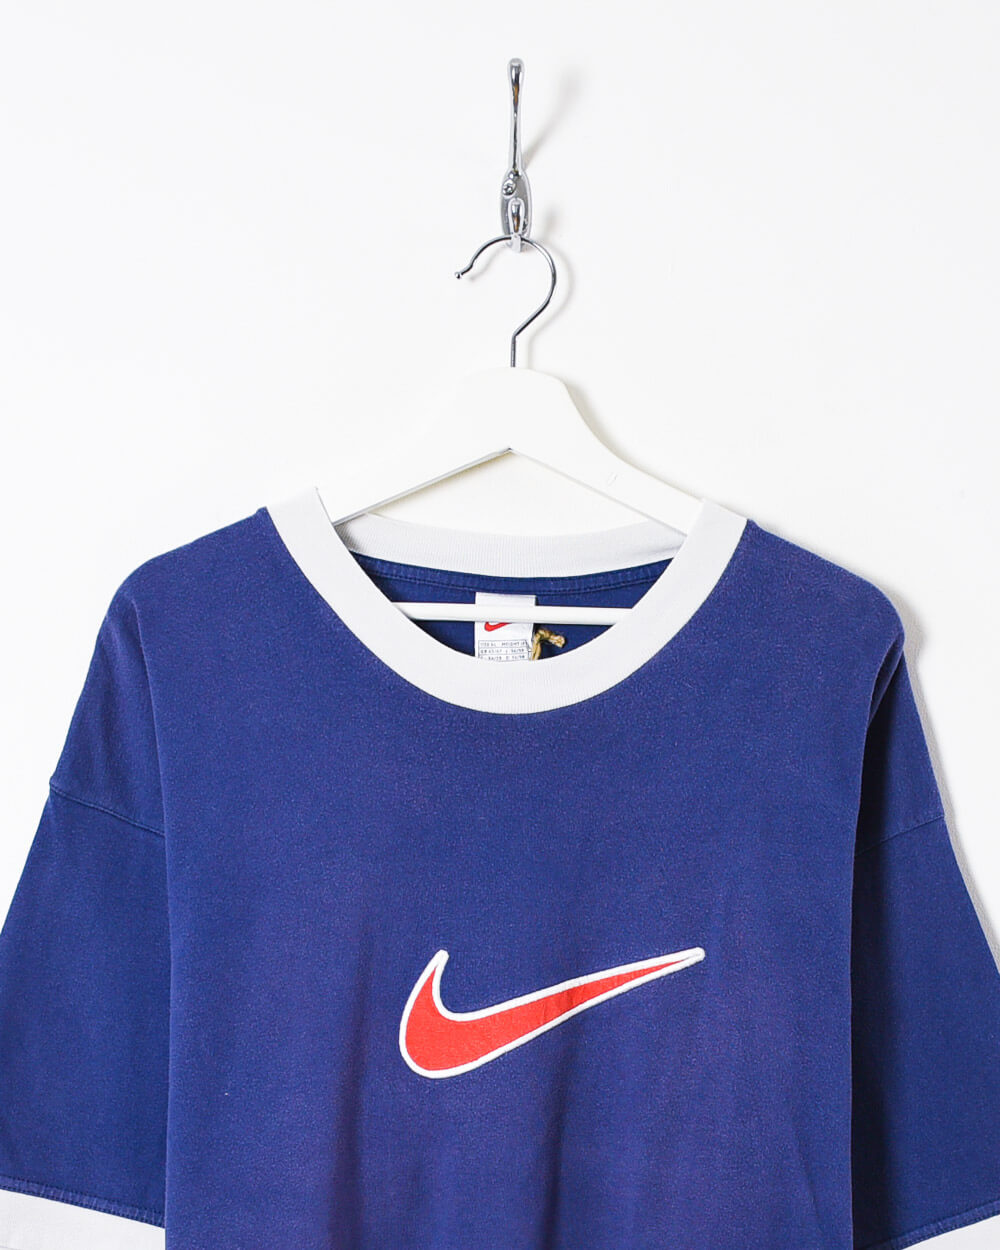 Blue Nike T-Shirt - X-Large